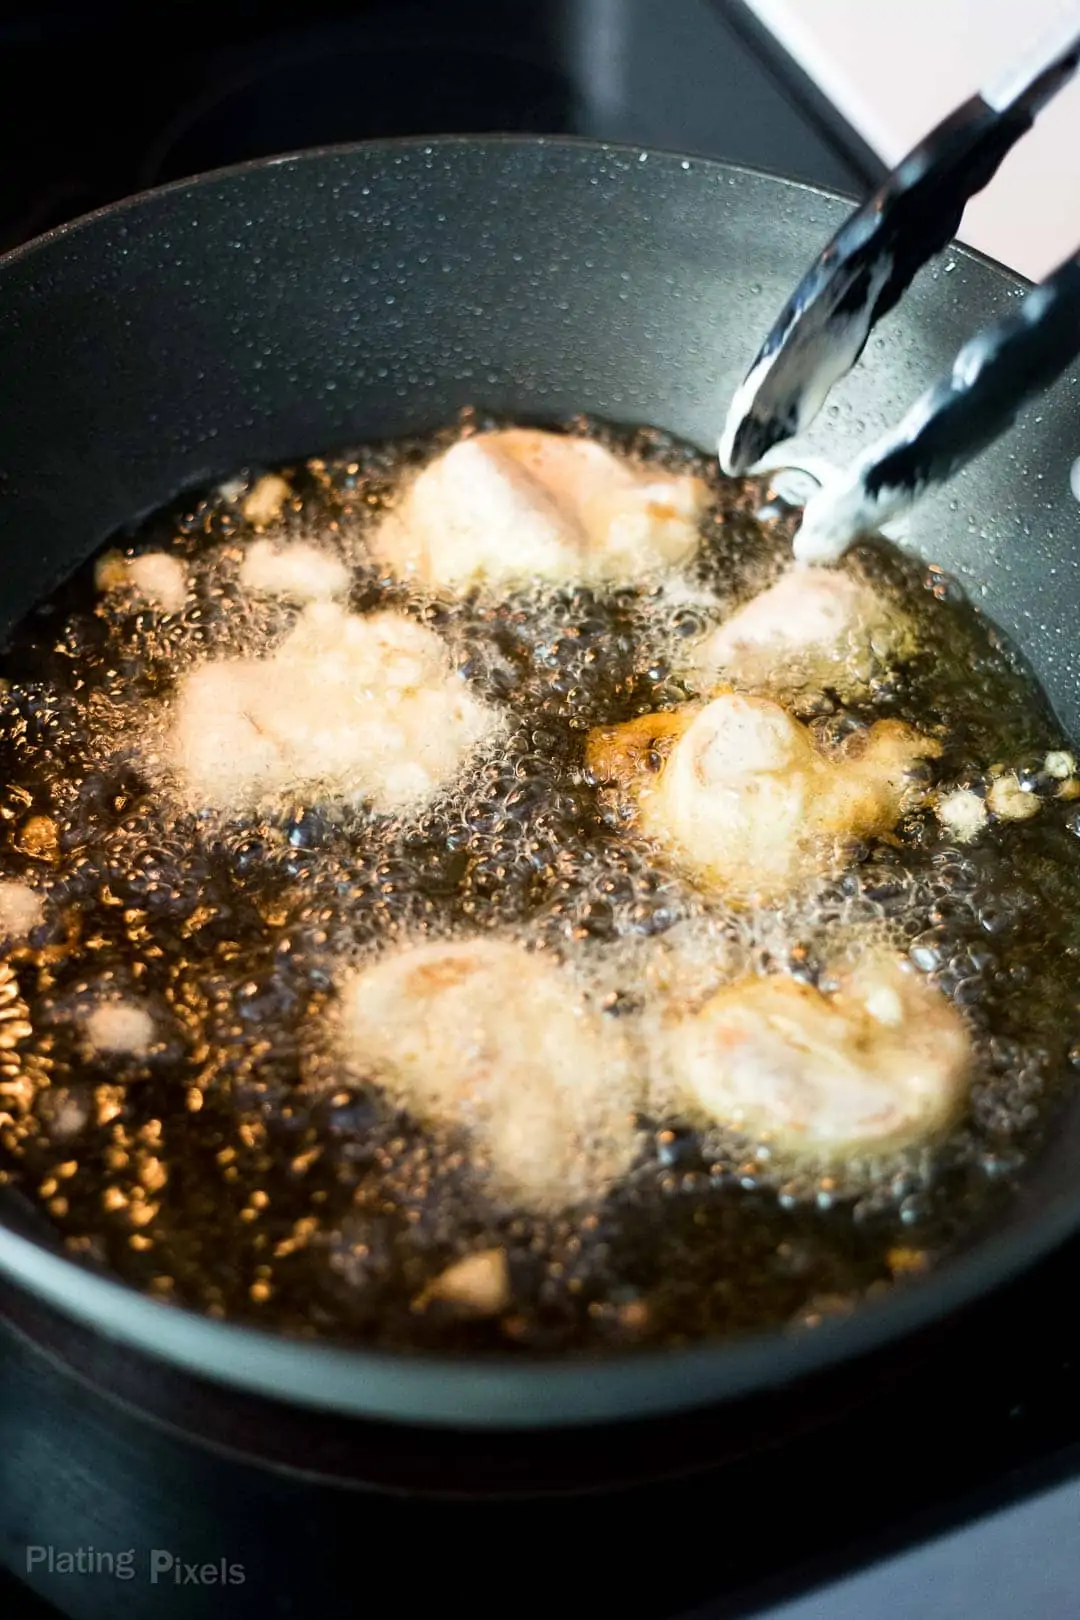 Process shot of frying fish in a pan